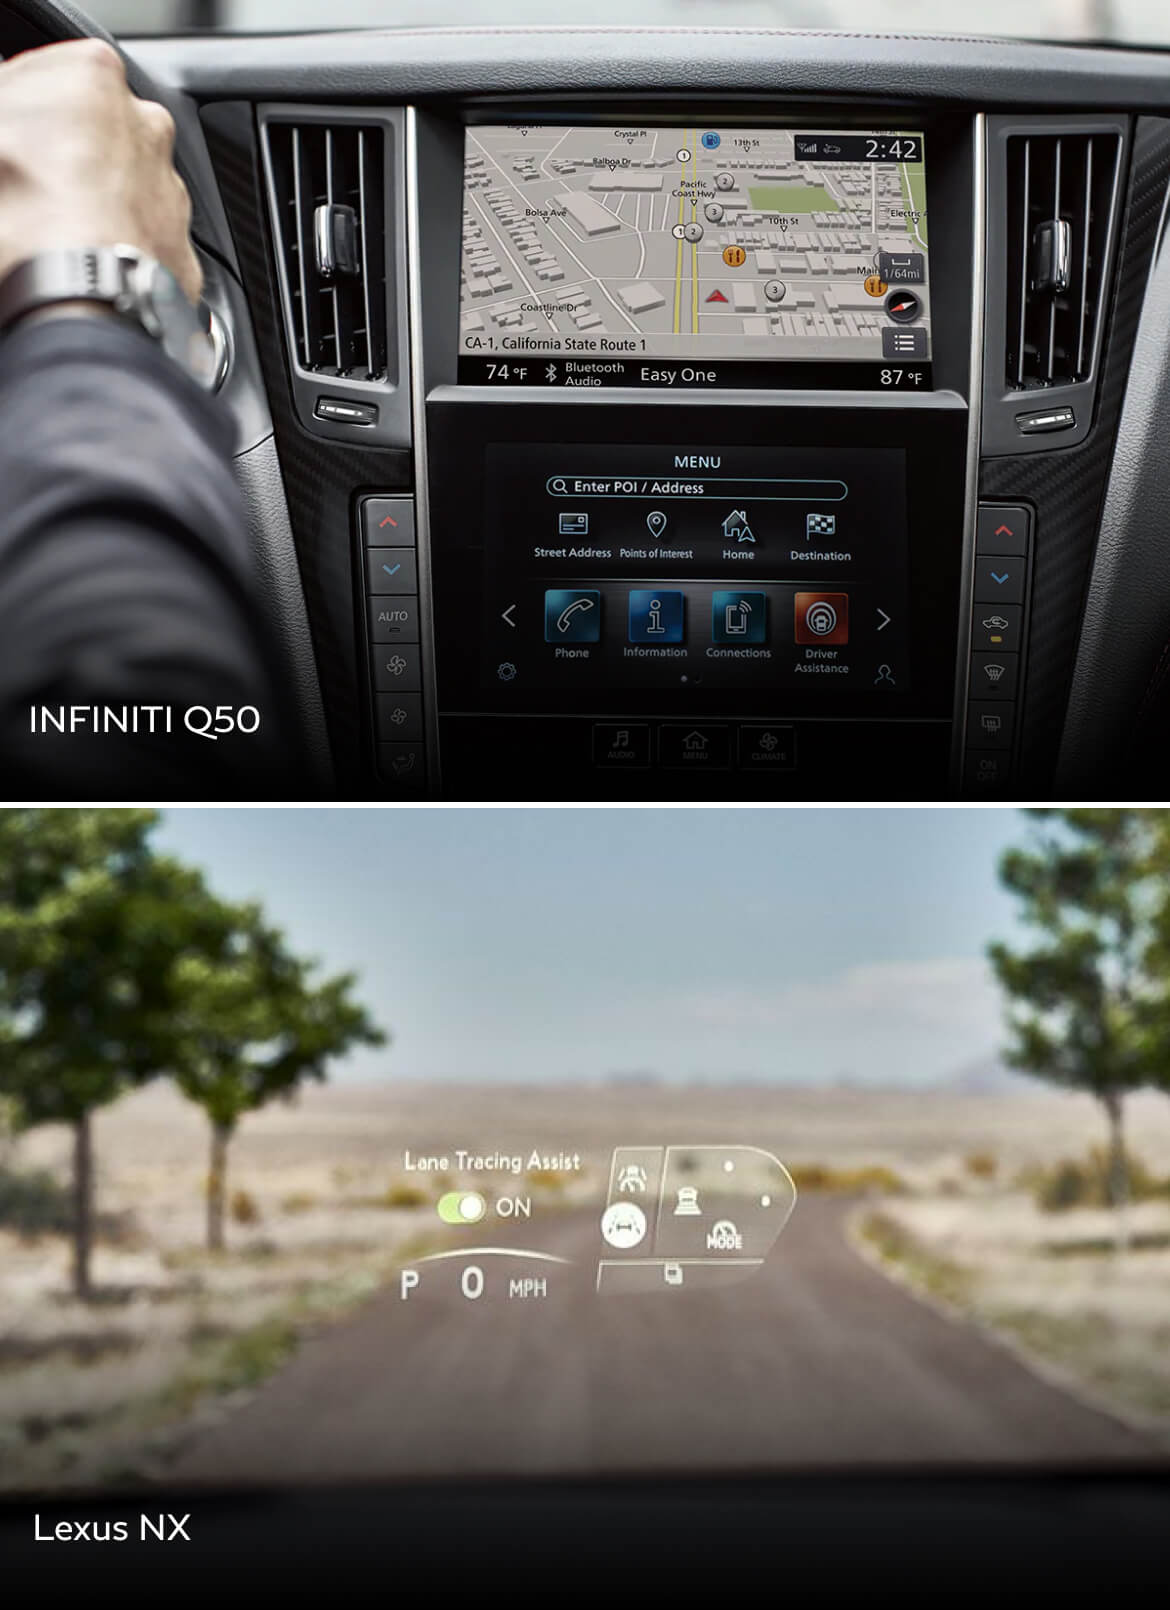 INFINITI QX50 vs. Lexus NX Safety and Technology